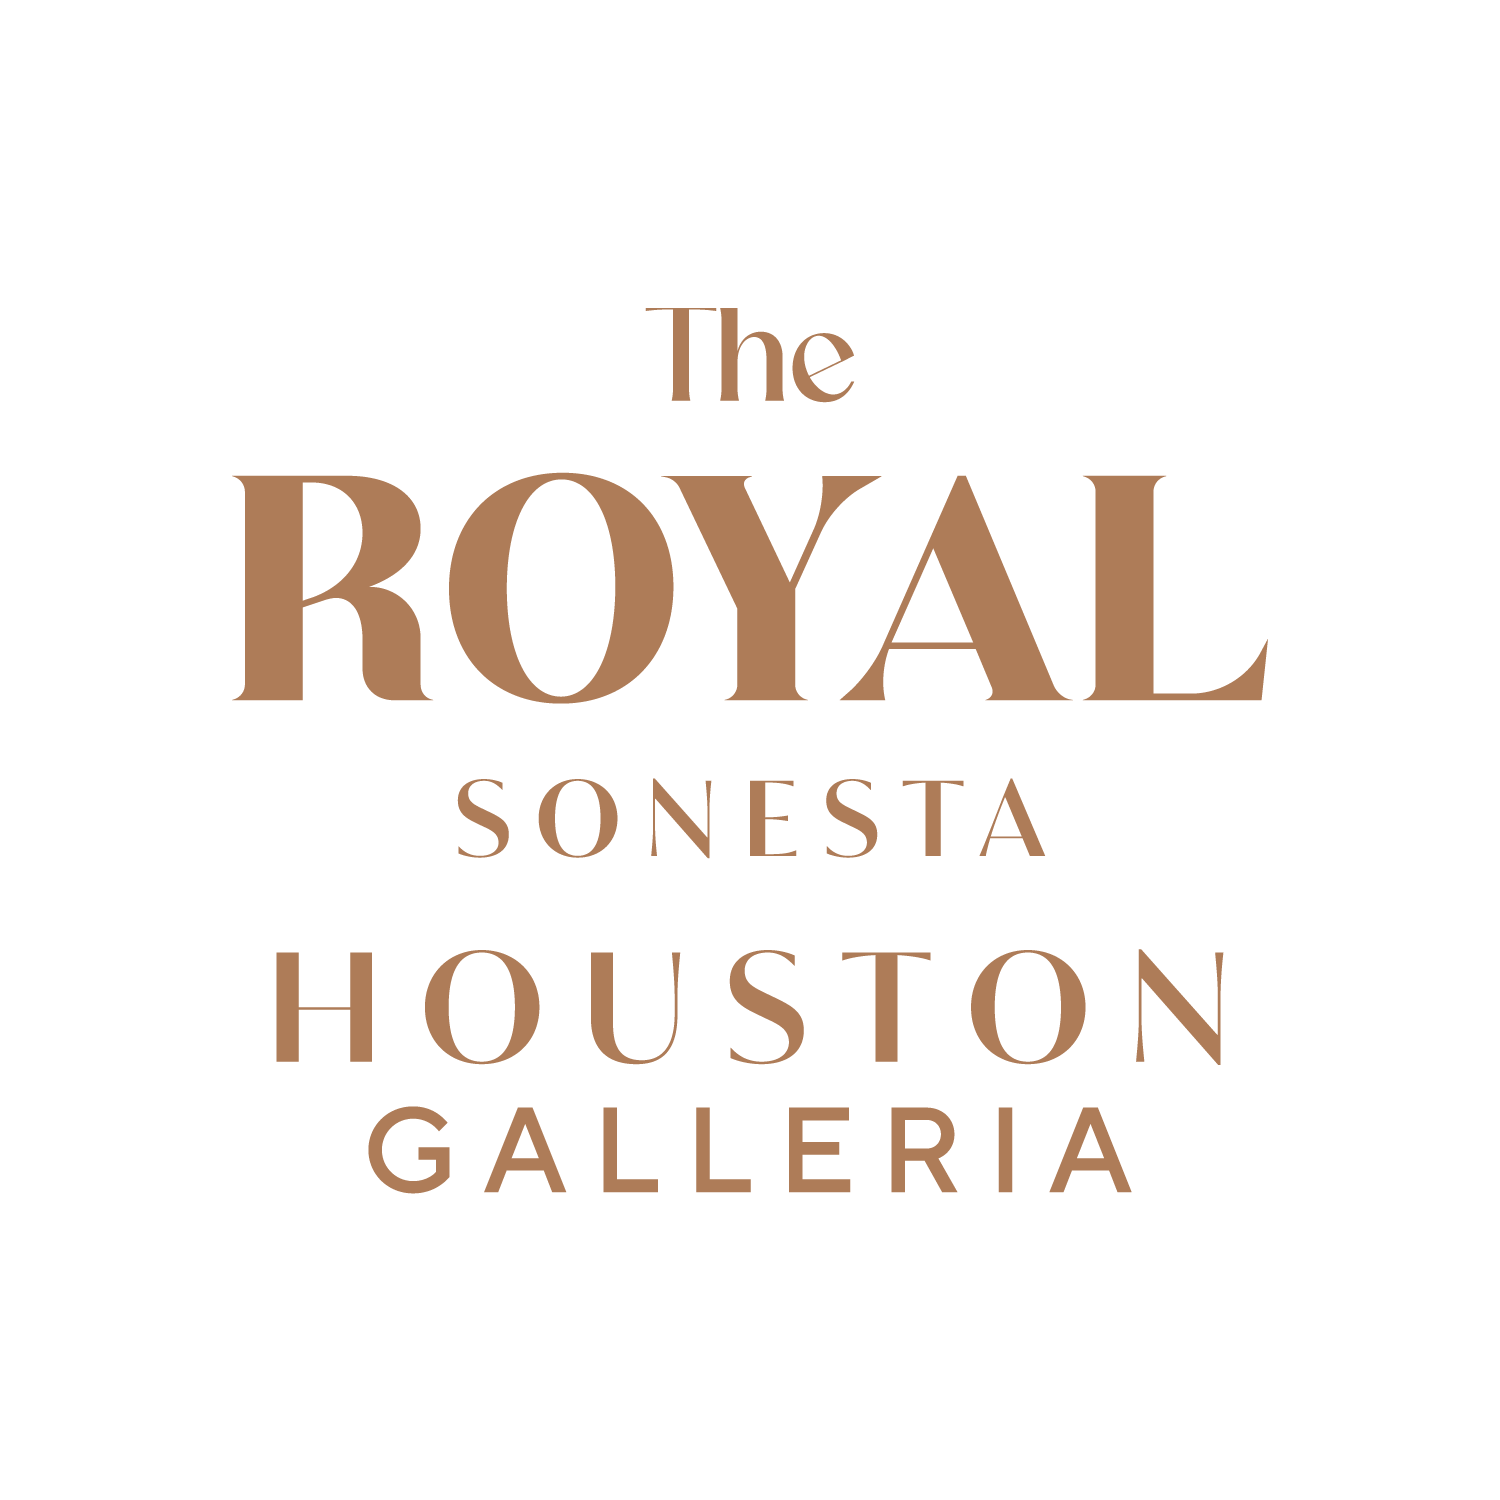 The Royal Sonesta Houston Galleria